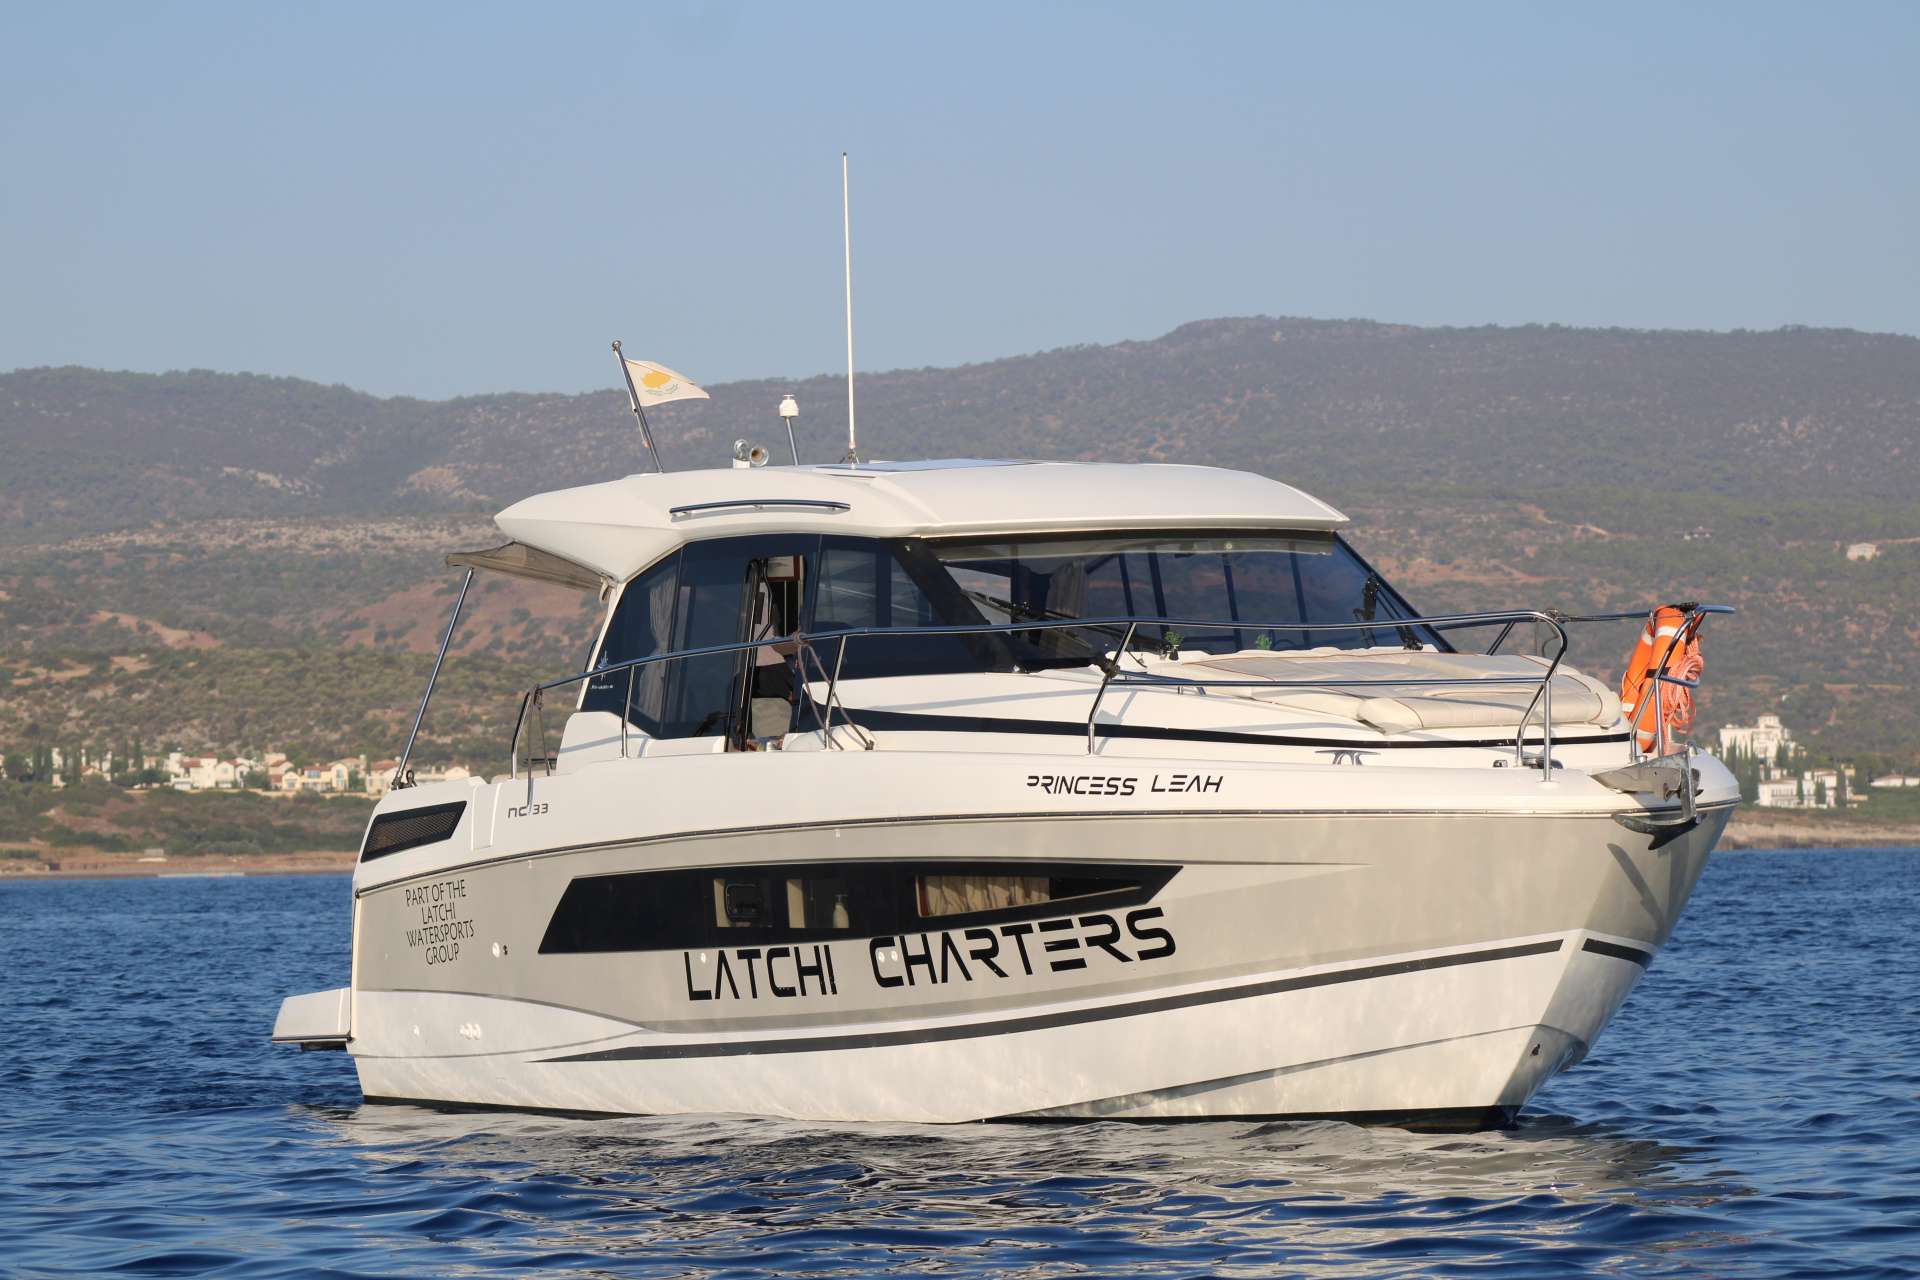 NC33 - Yacht Charter Cyprus & Boat hire in Cyprus Poli Crysochous 1